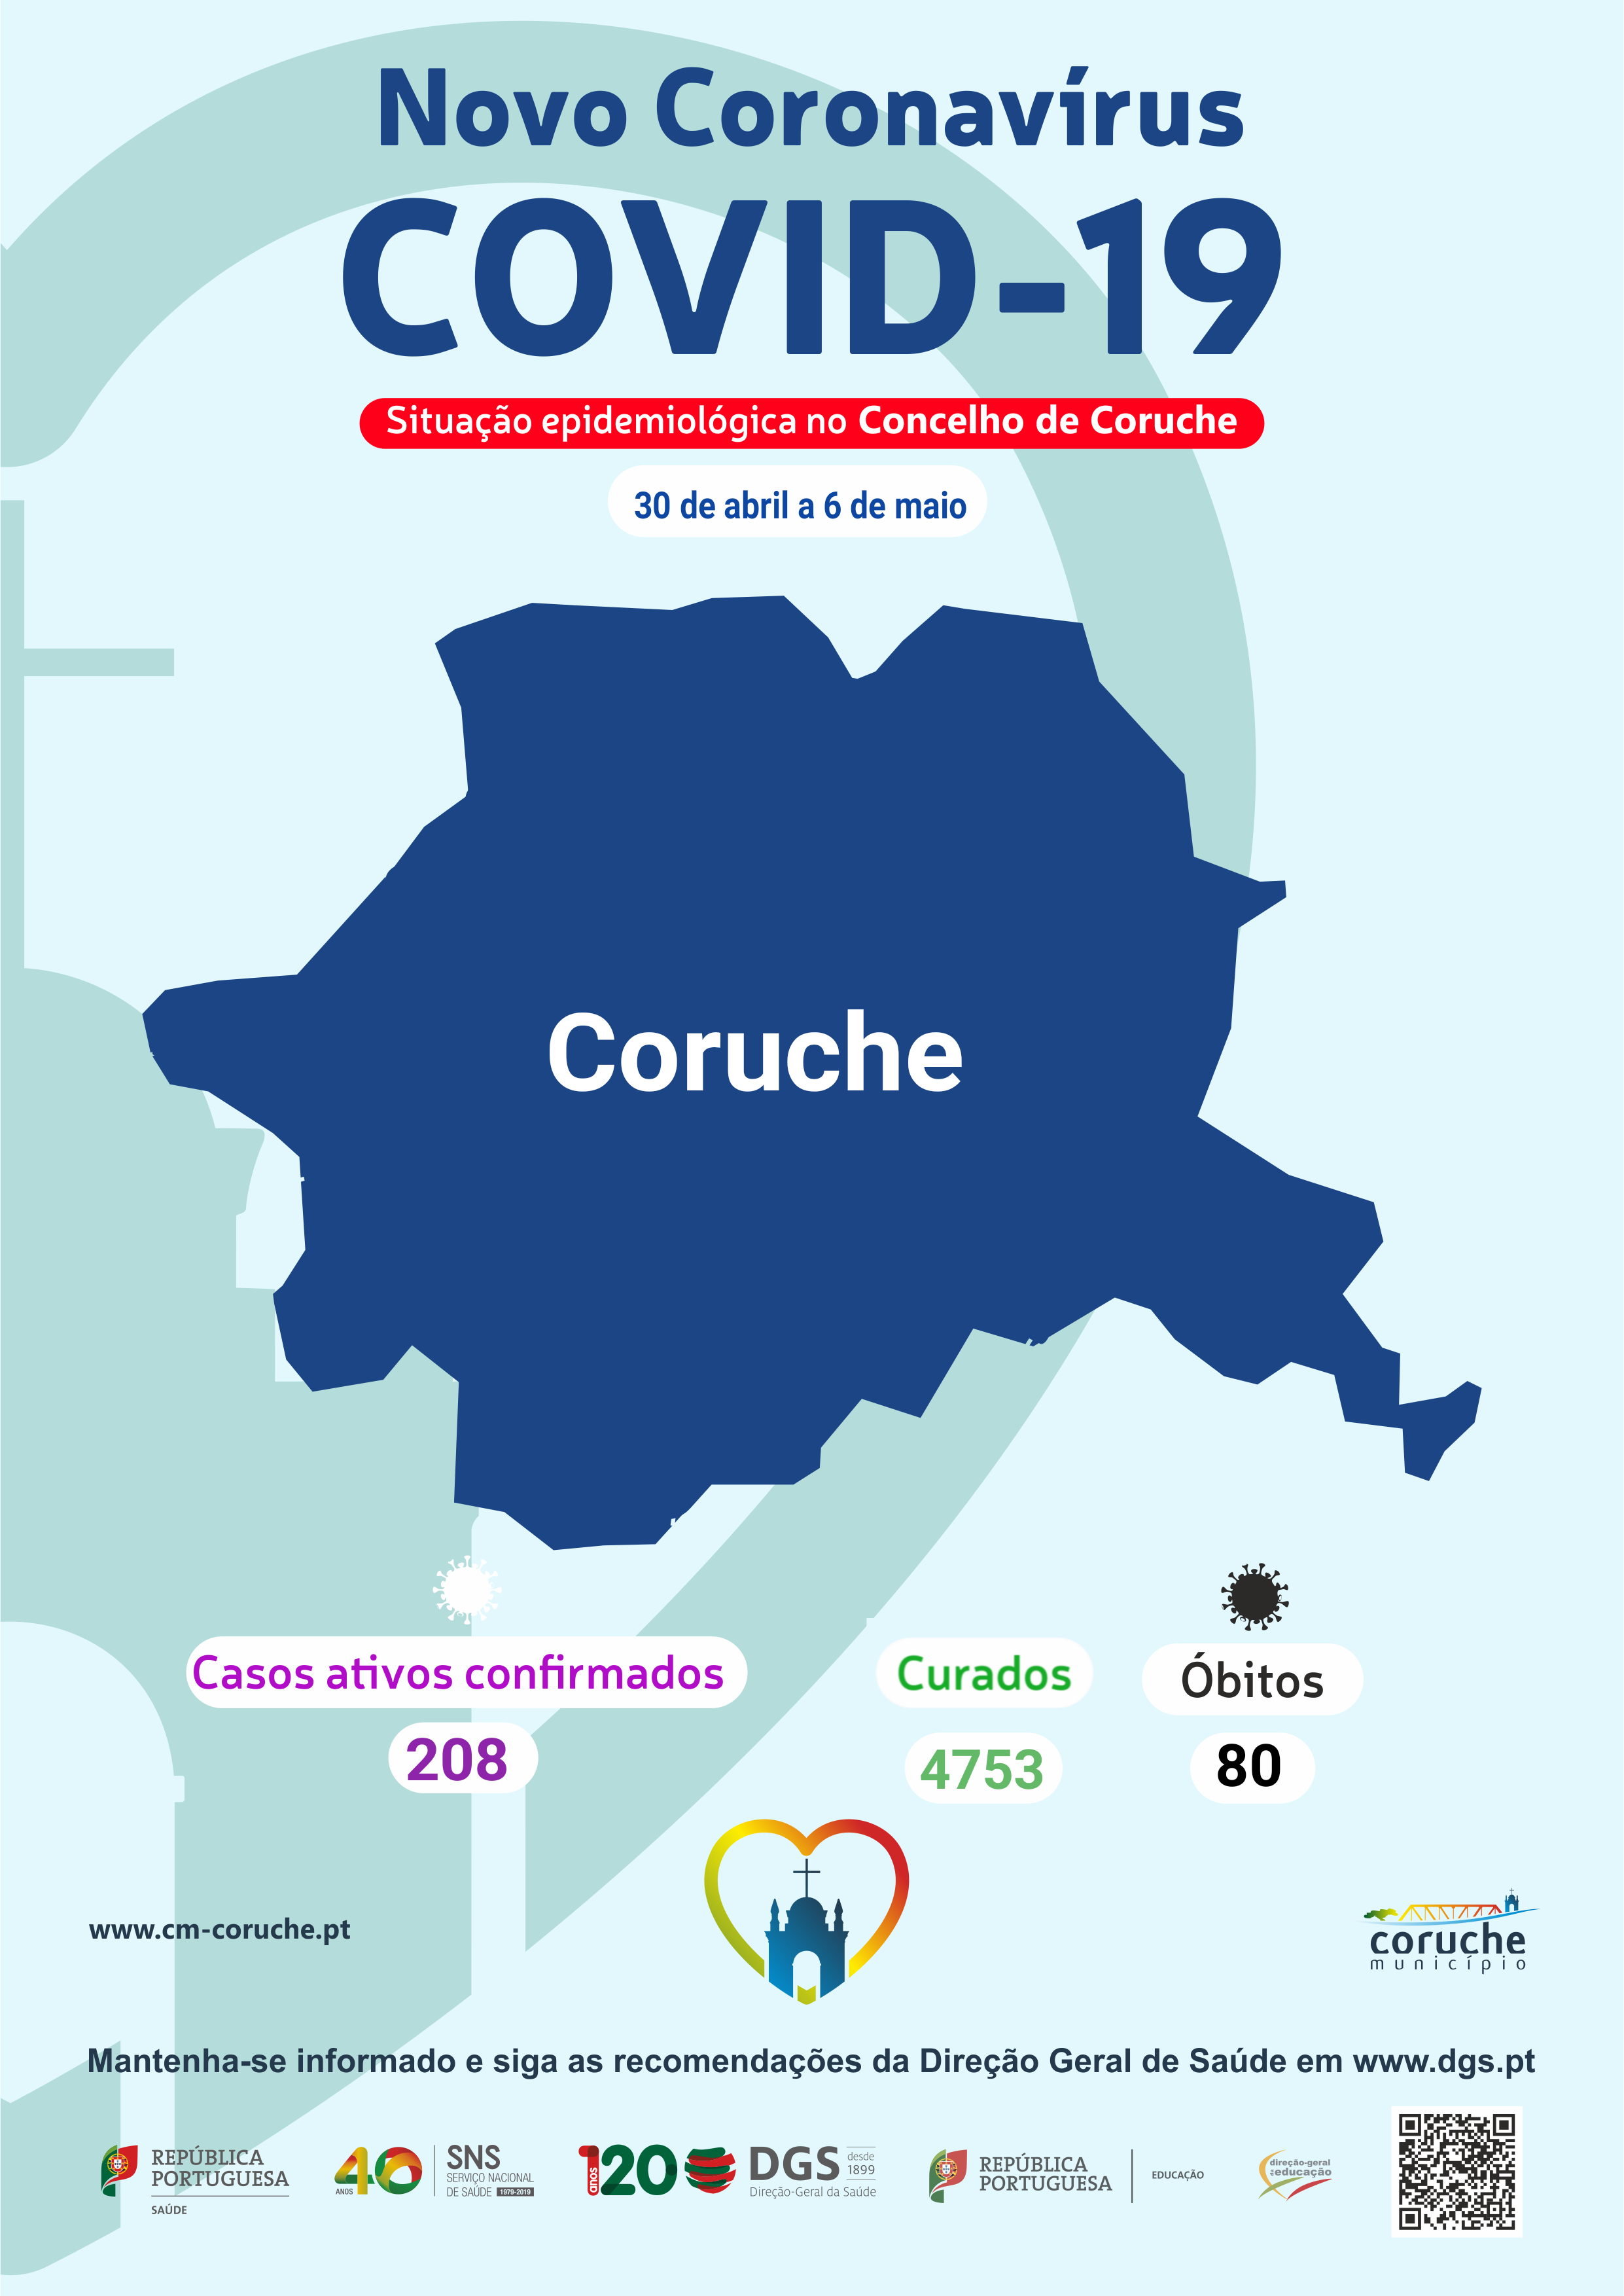 𝗤𝘂𝗲𝗺 𝗦𝗮𝗯𝗲?” - 𝗤𝘂𝗶𝘇 𝗱𝗮 - Câmara Municipal de Coruche